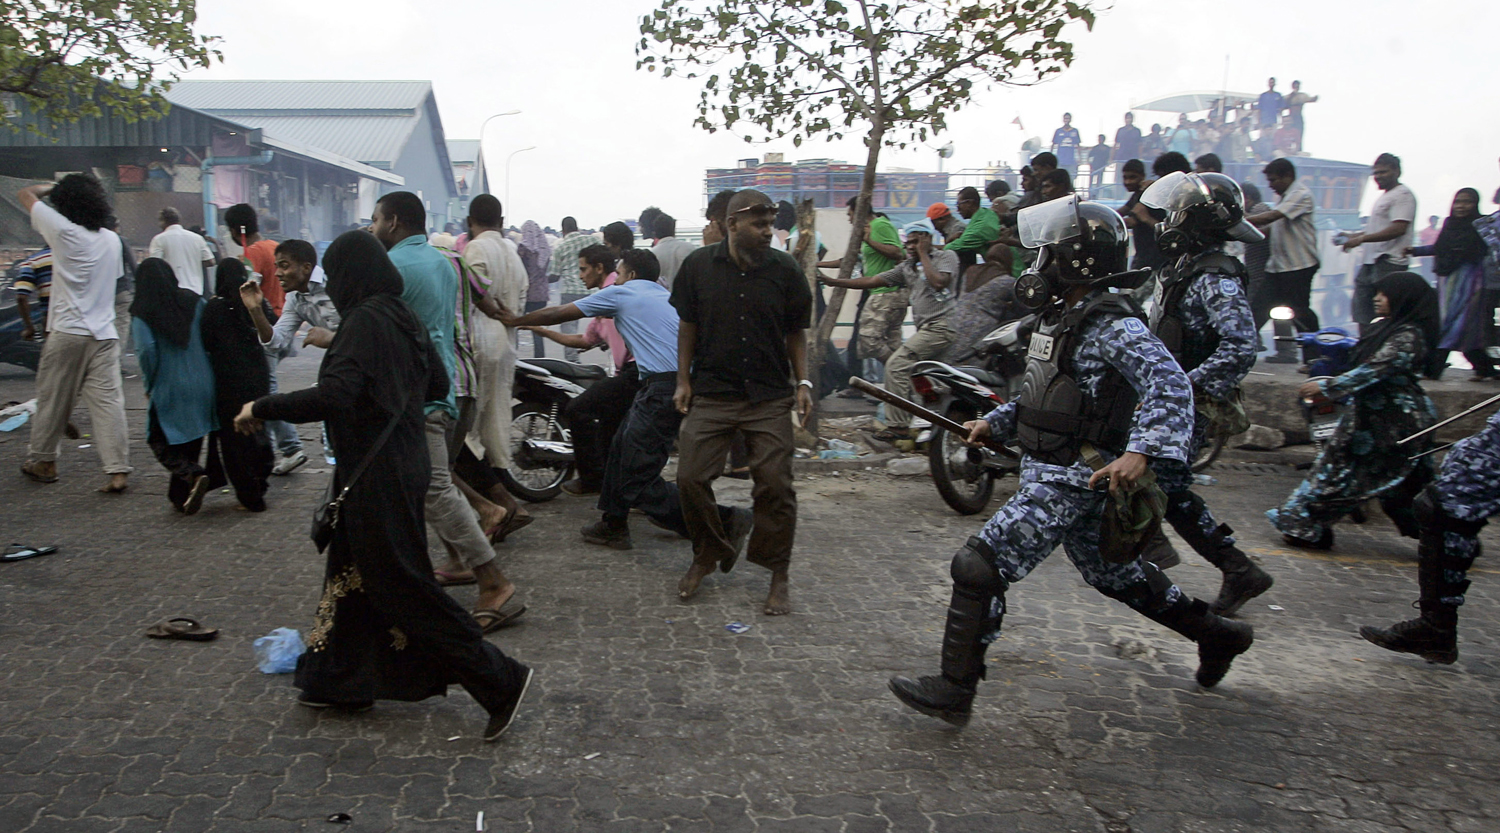 A Presidential Power Struggle in Maldives